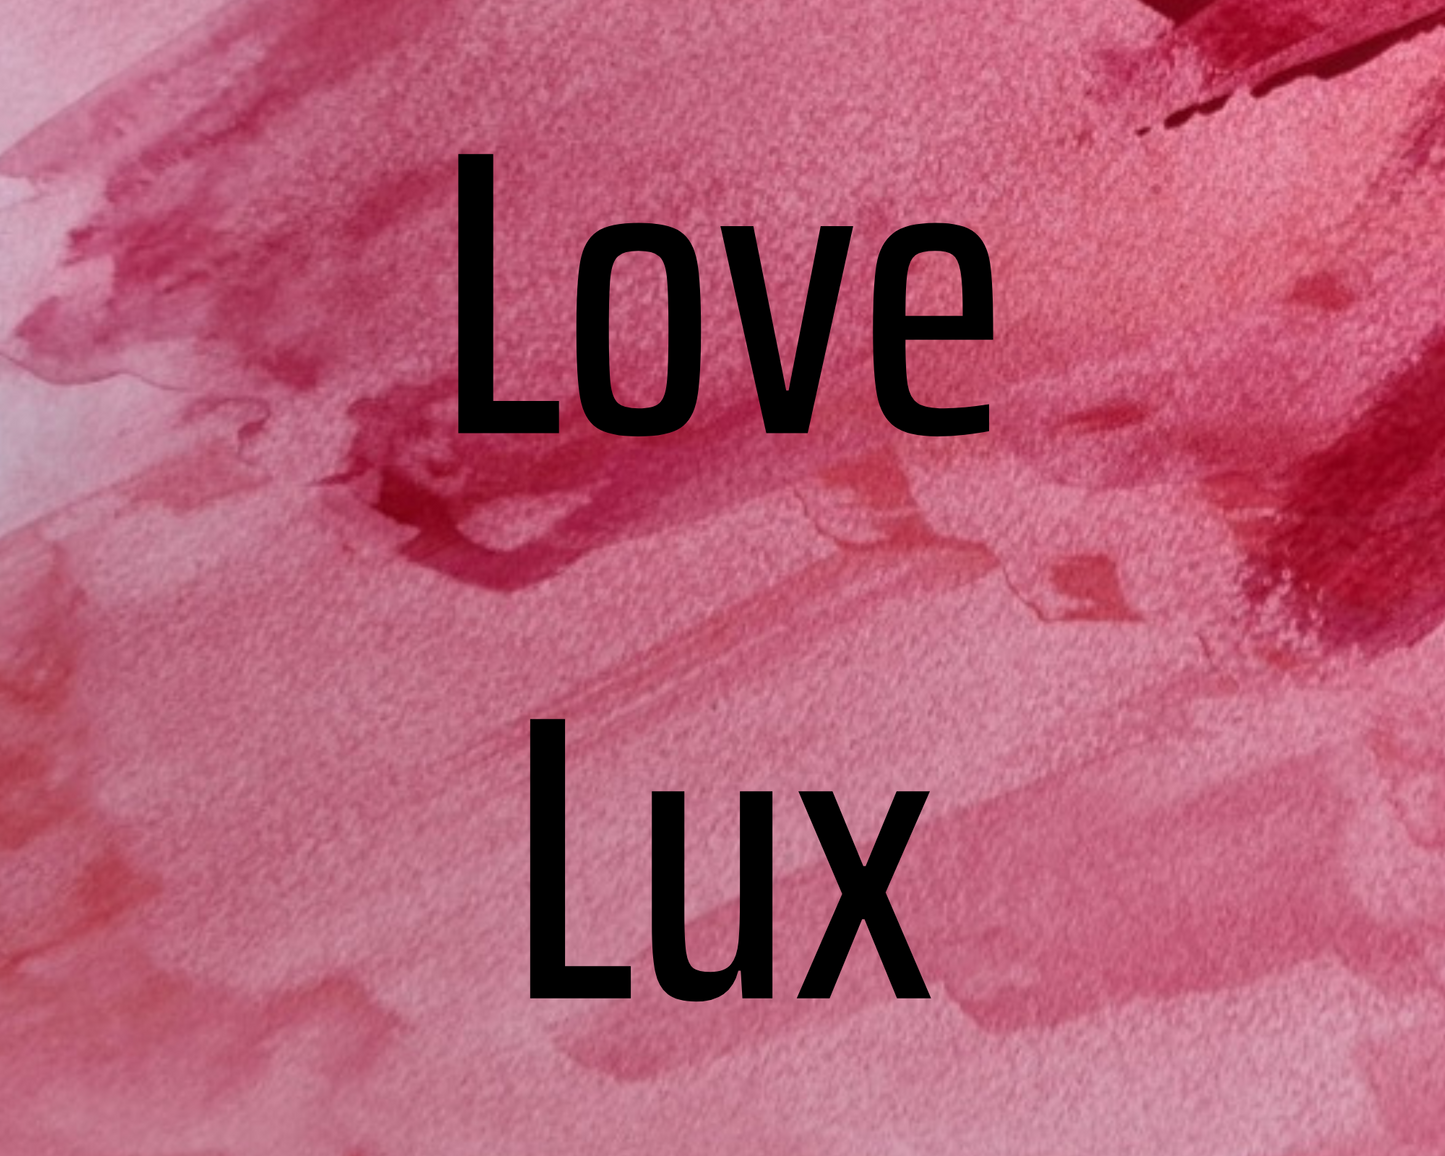 Love Lux